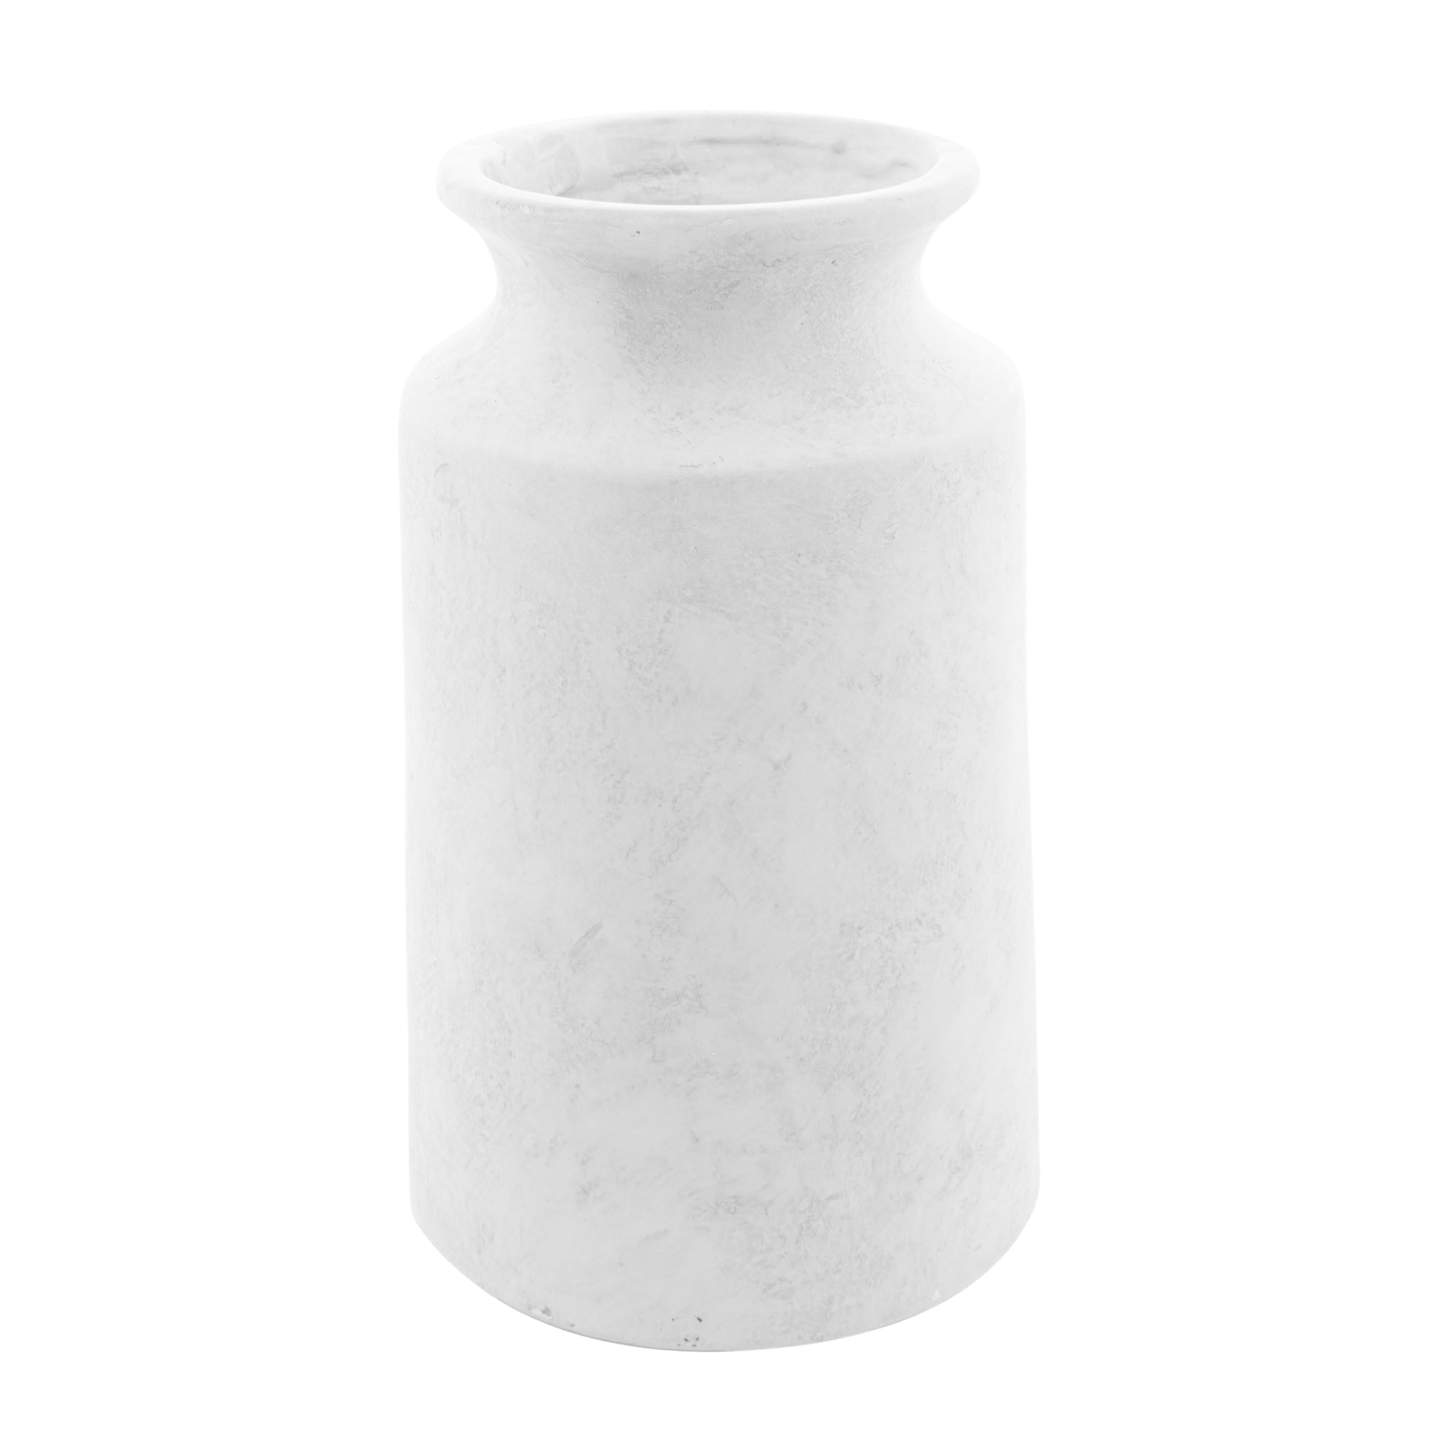 Pale stone urn vase